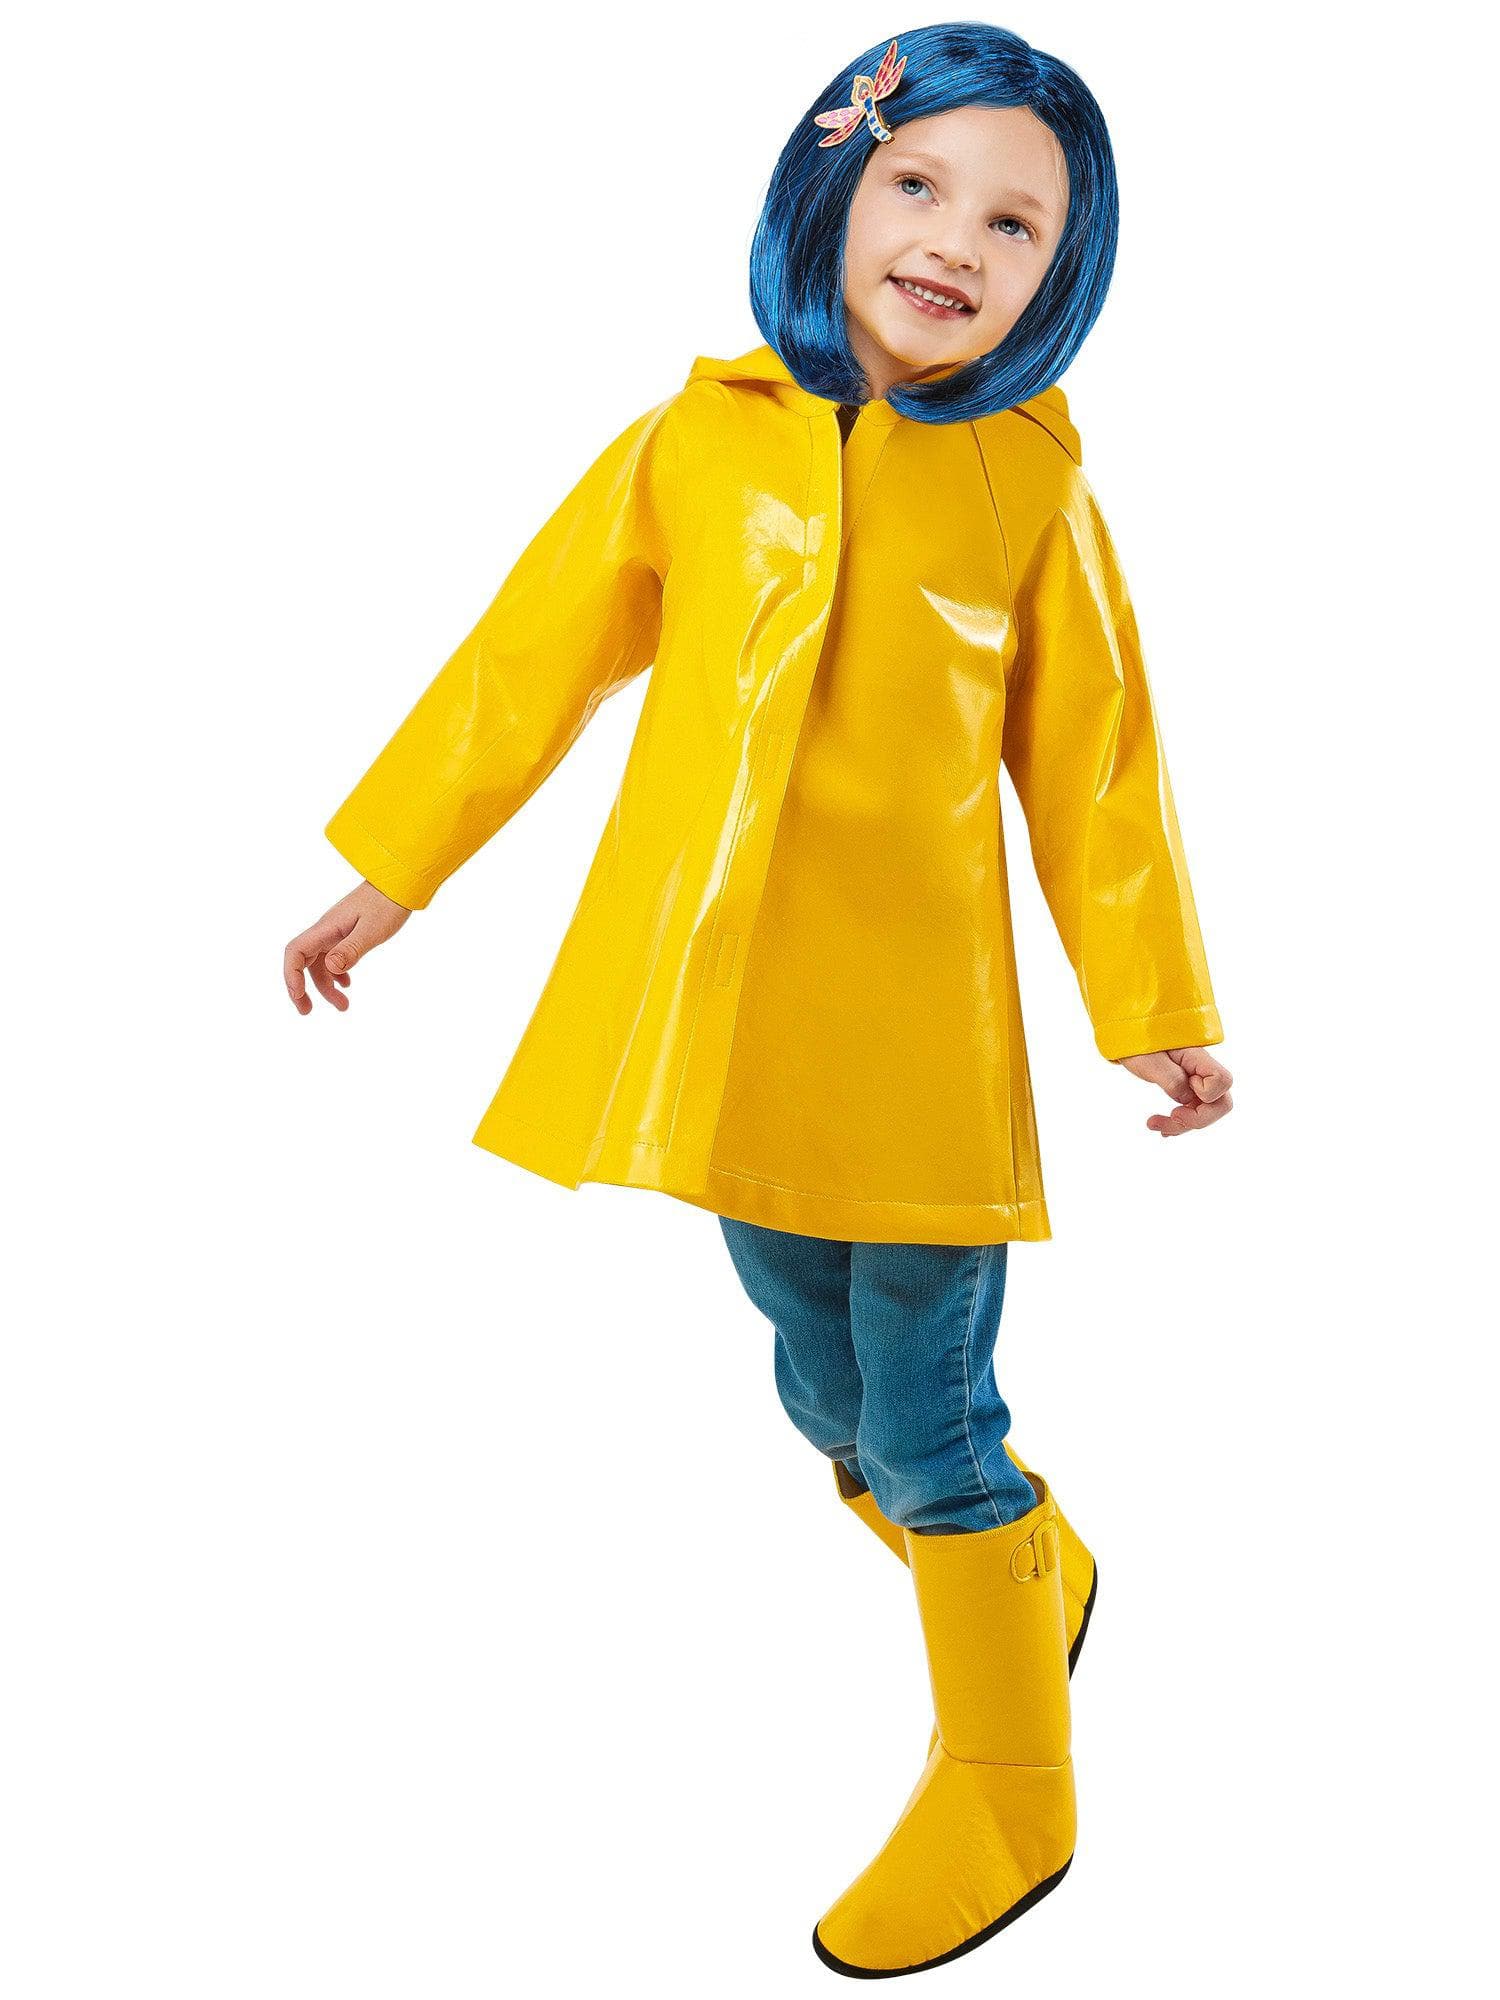 Coraline Kids Costume - costumes.com